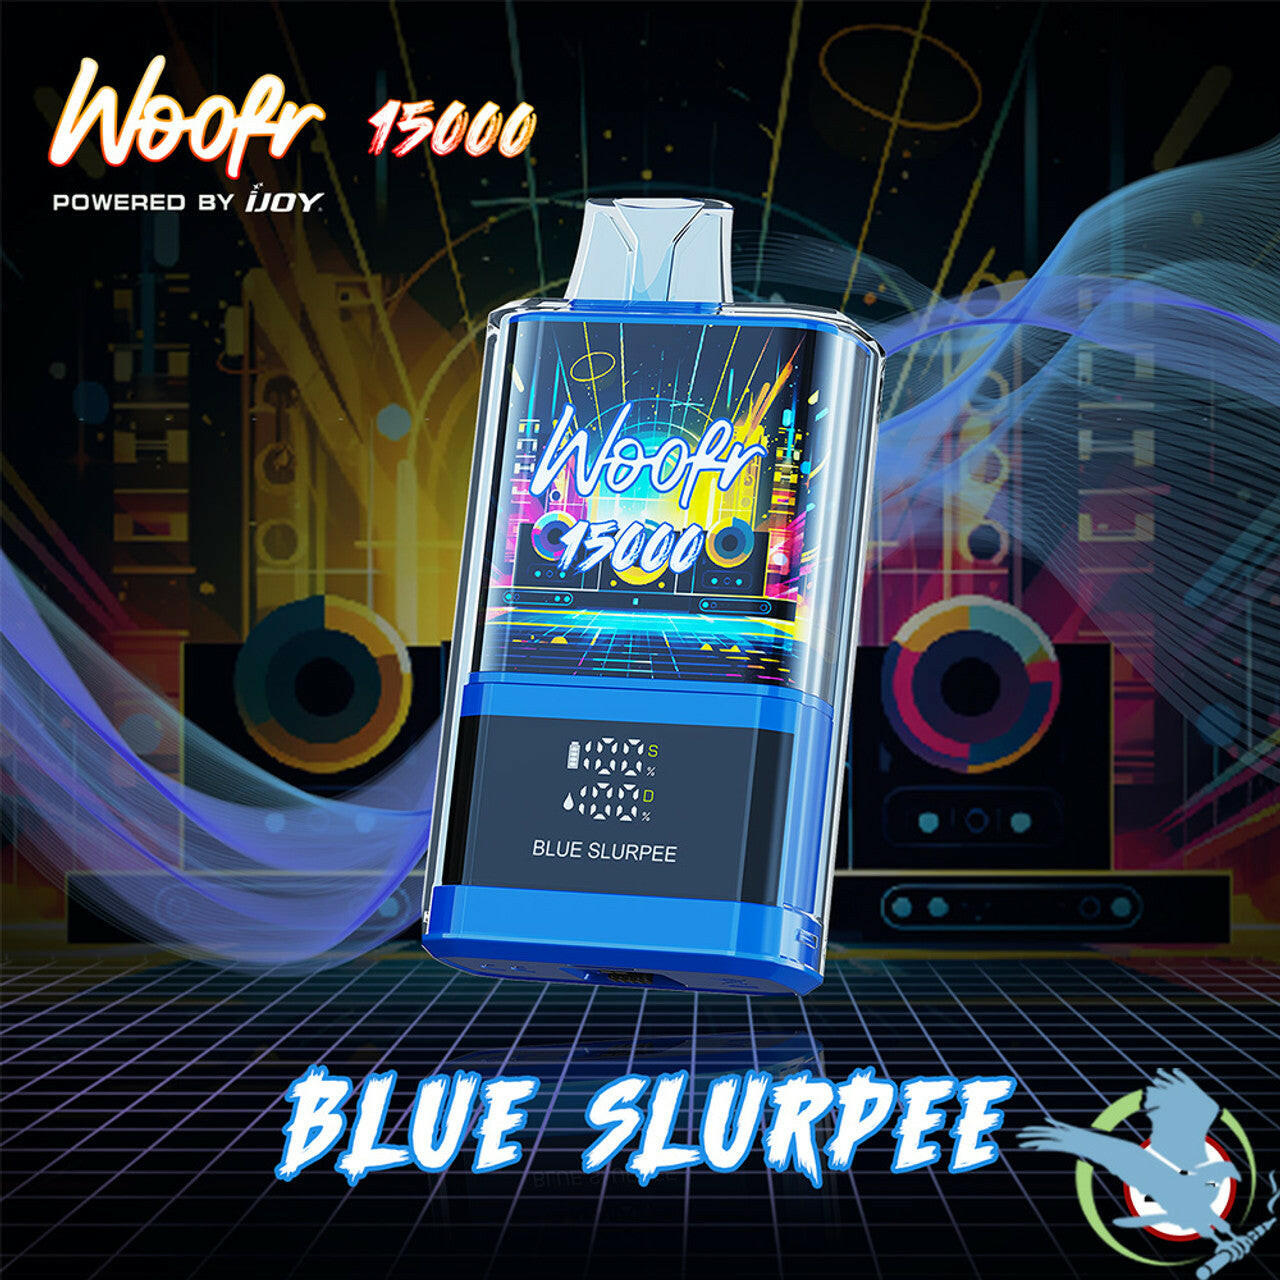 Woofr 15000 Disposable - Blue Slurpee